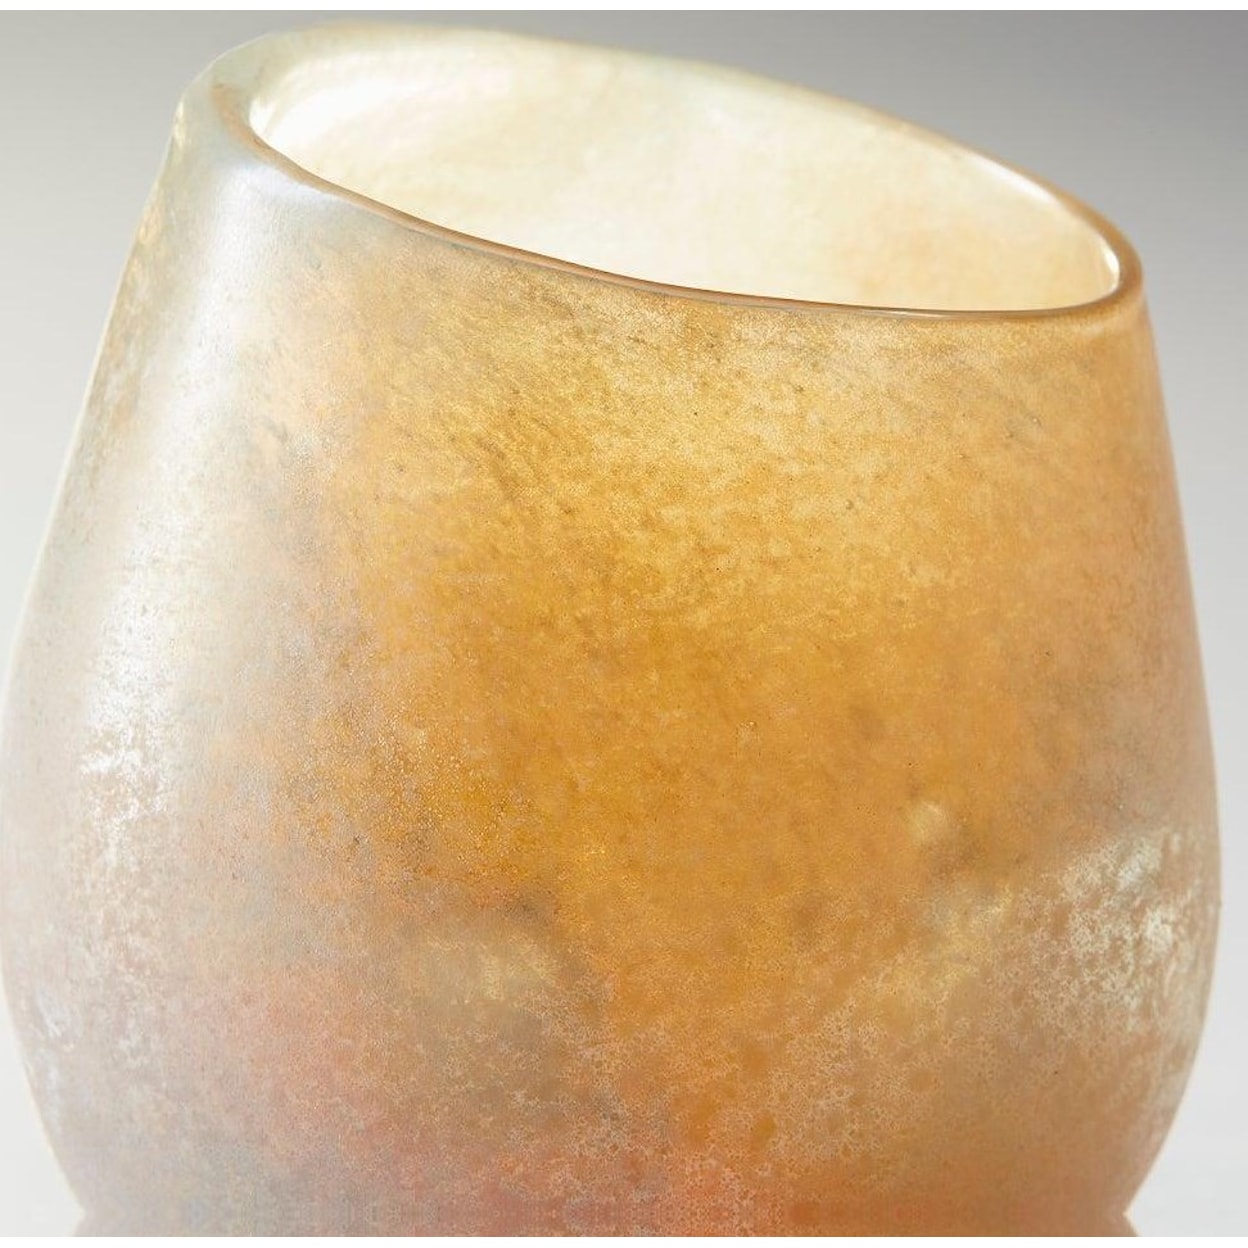 Cyan Design 10k Accessory Small Oberon Vase